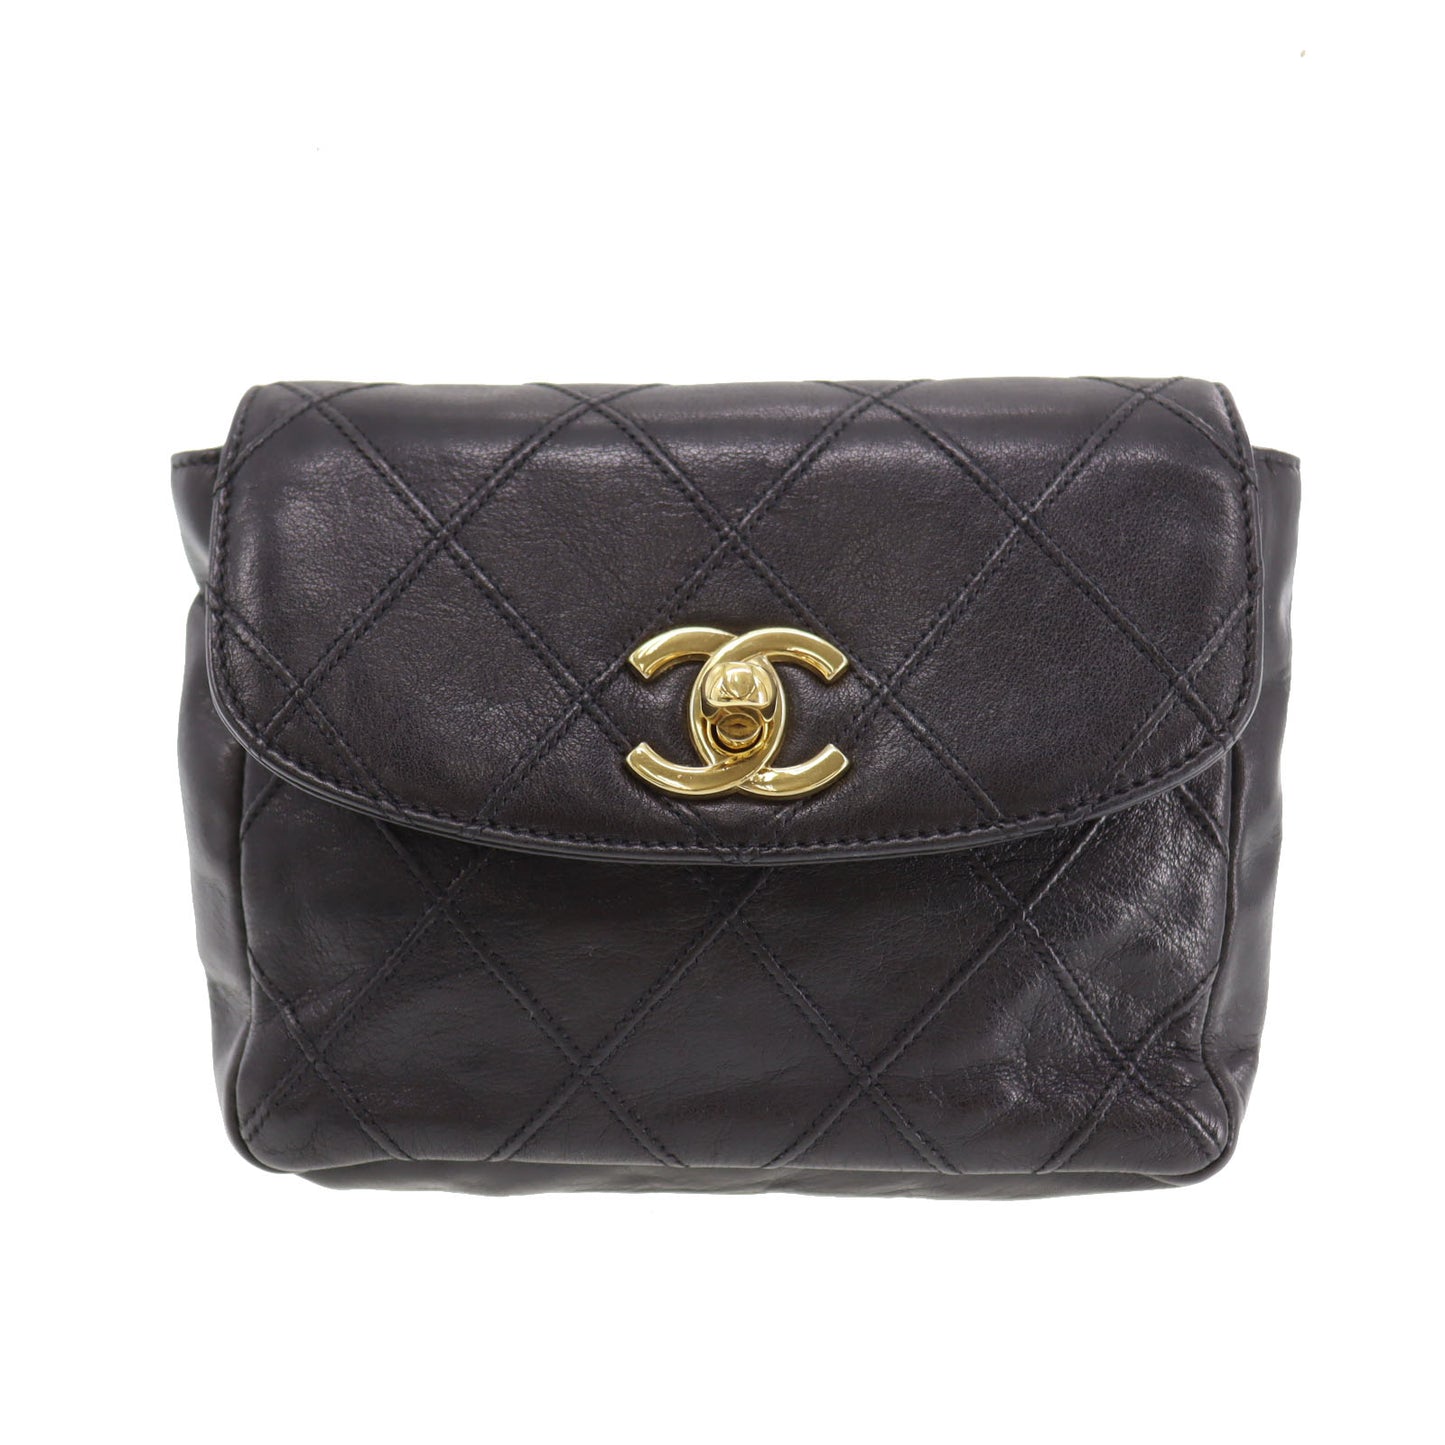 CHANEL Bicolore Bum Bag Black Lambskin Leather #CN575